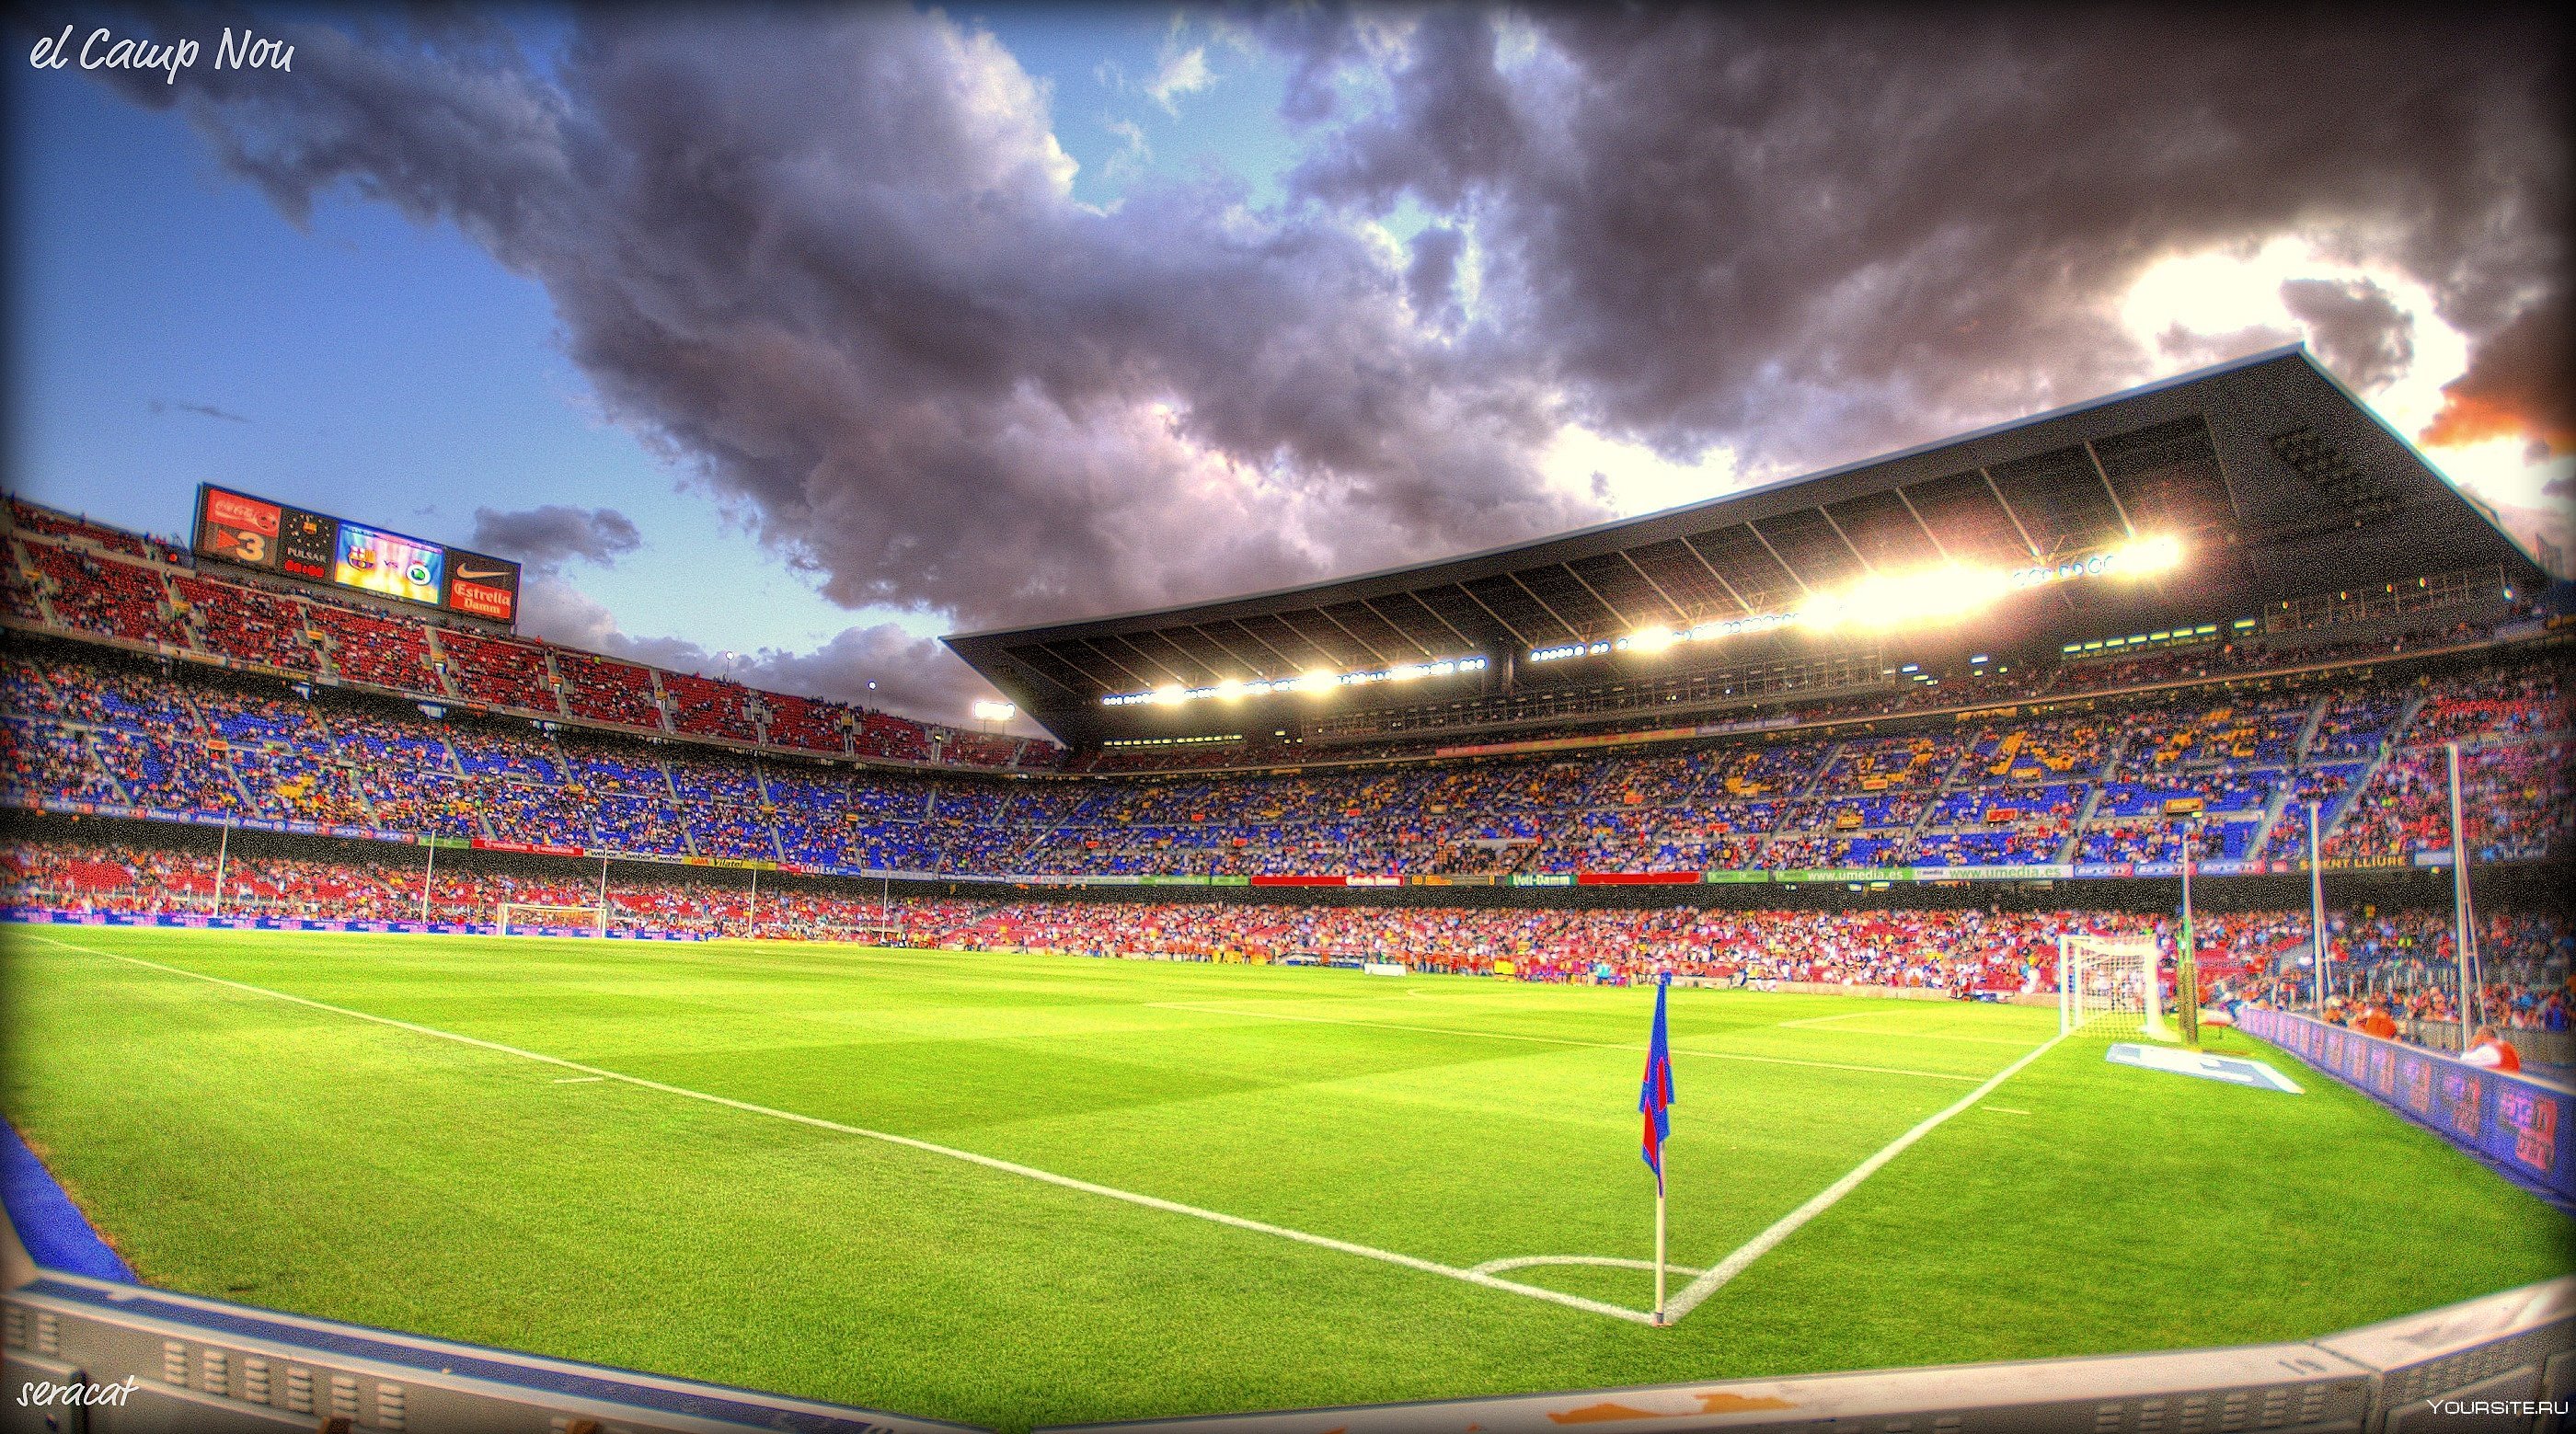 Граждан стадион. Стадион Камп ноу в Барселоне. Барселона стадион Camp nou. Барселона ноукамб стадион. Стадион “Камп ноу”: Арена футбольного клуба “Барселона”.